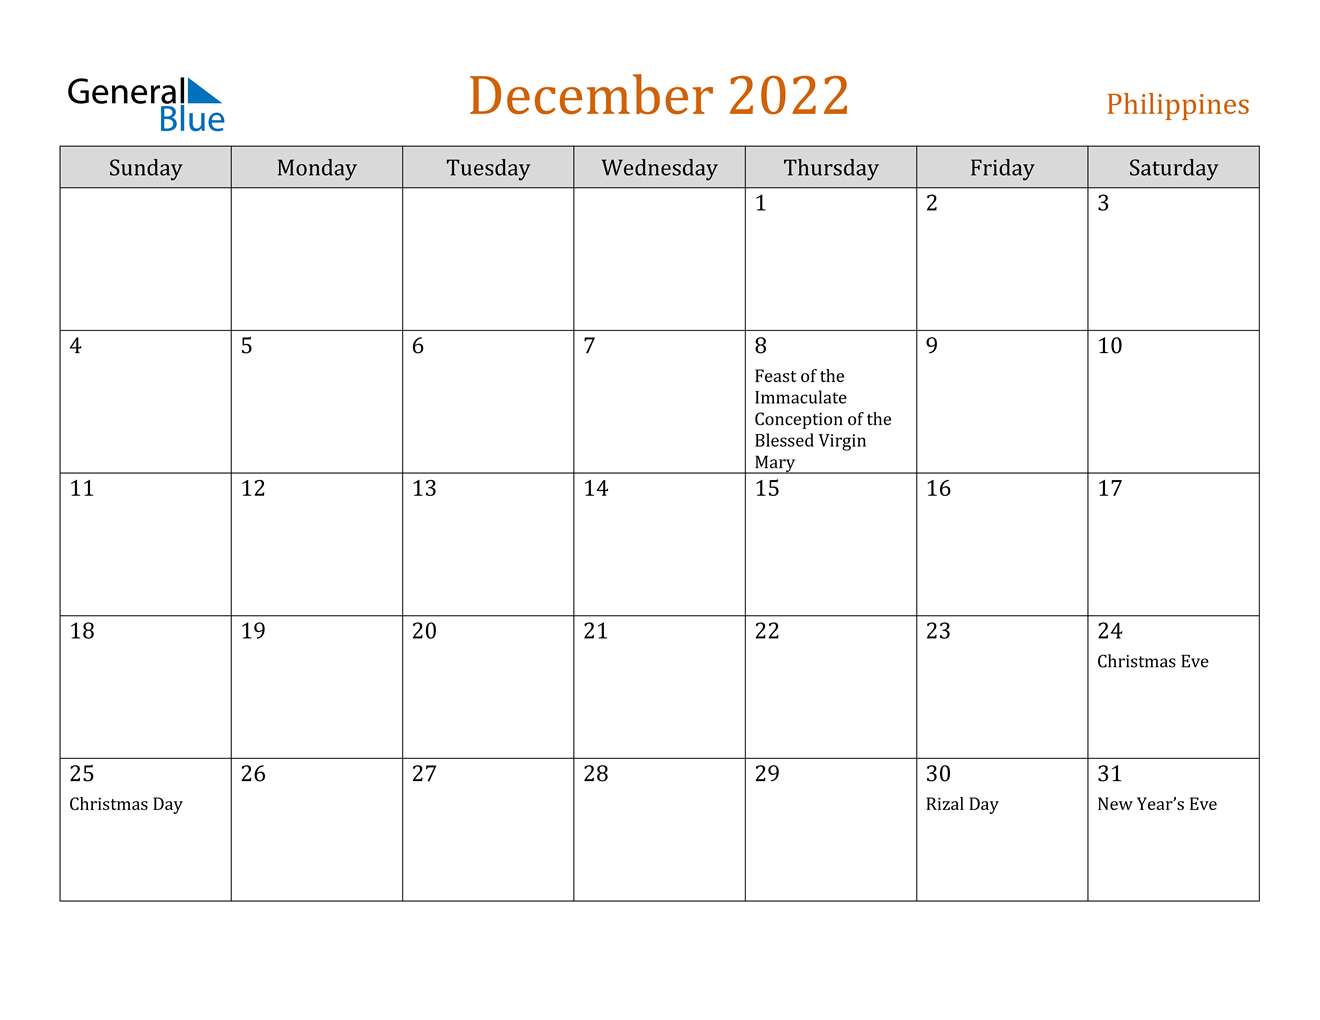 December 2022 Calendar - Philippines